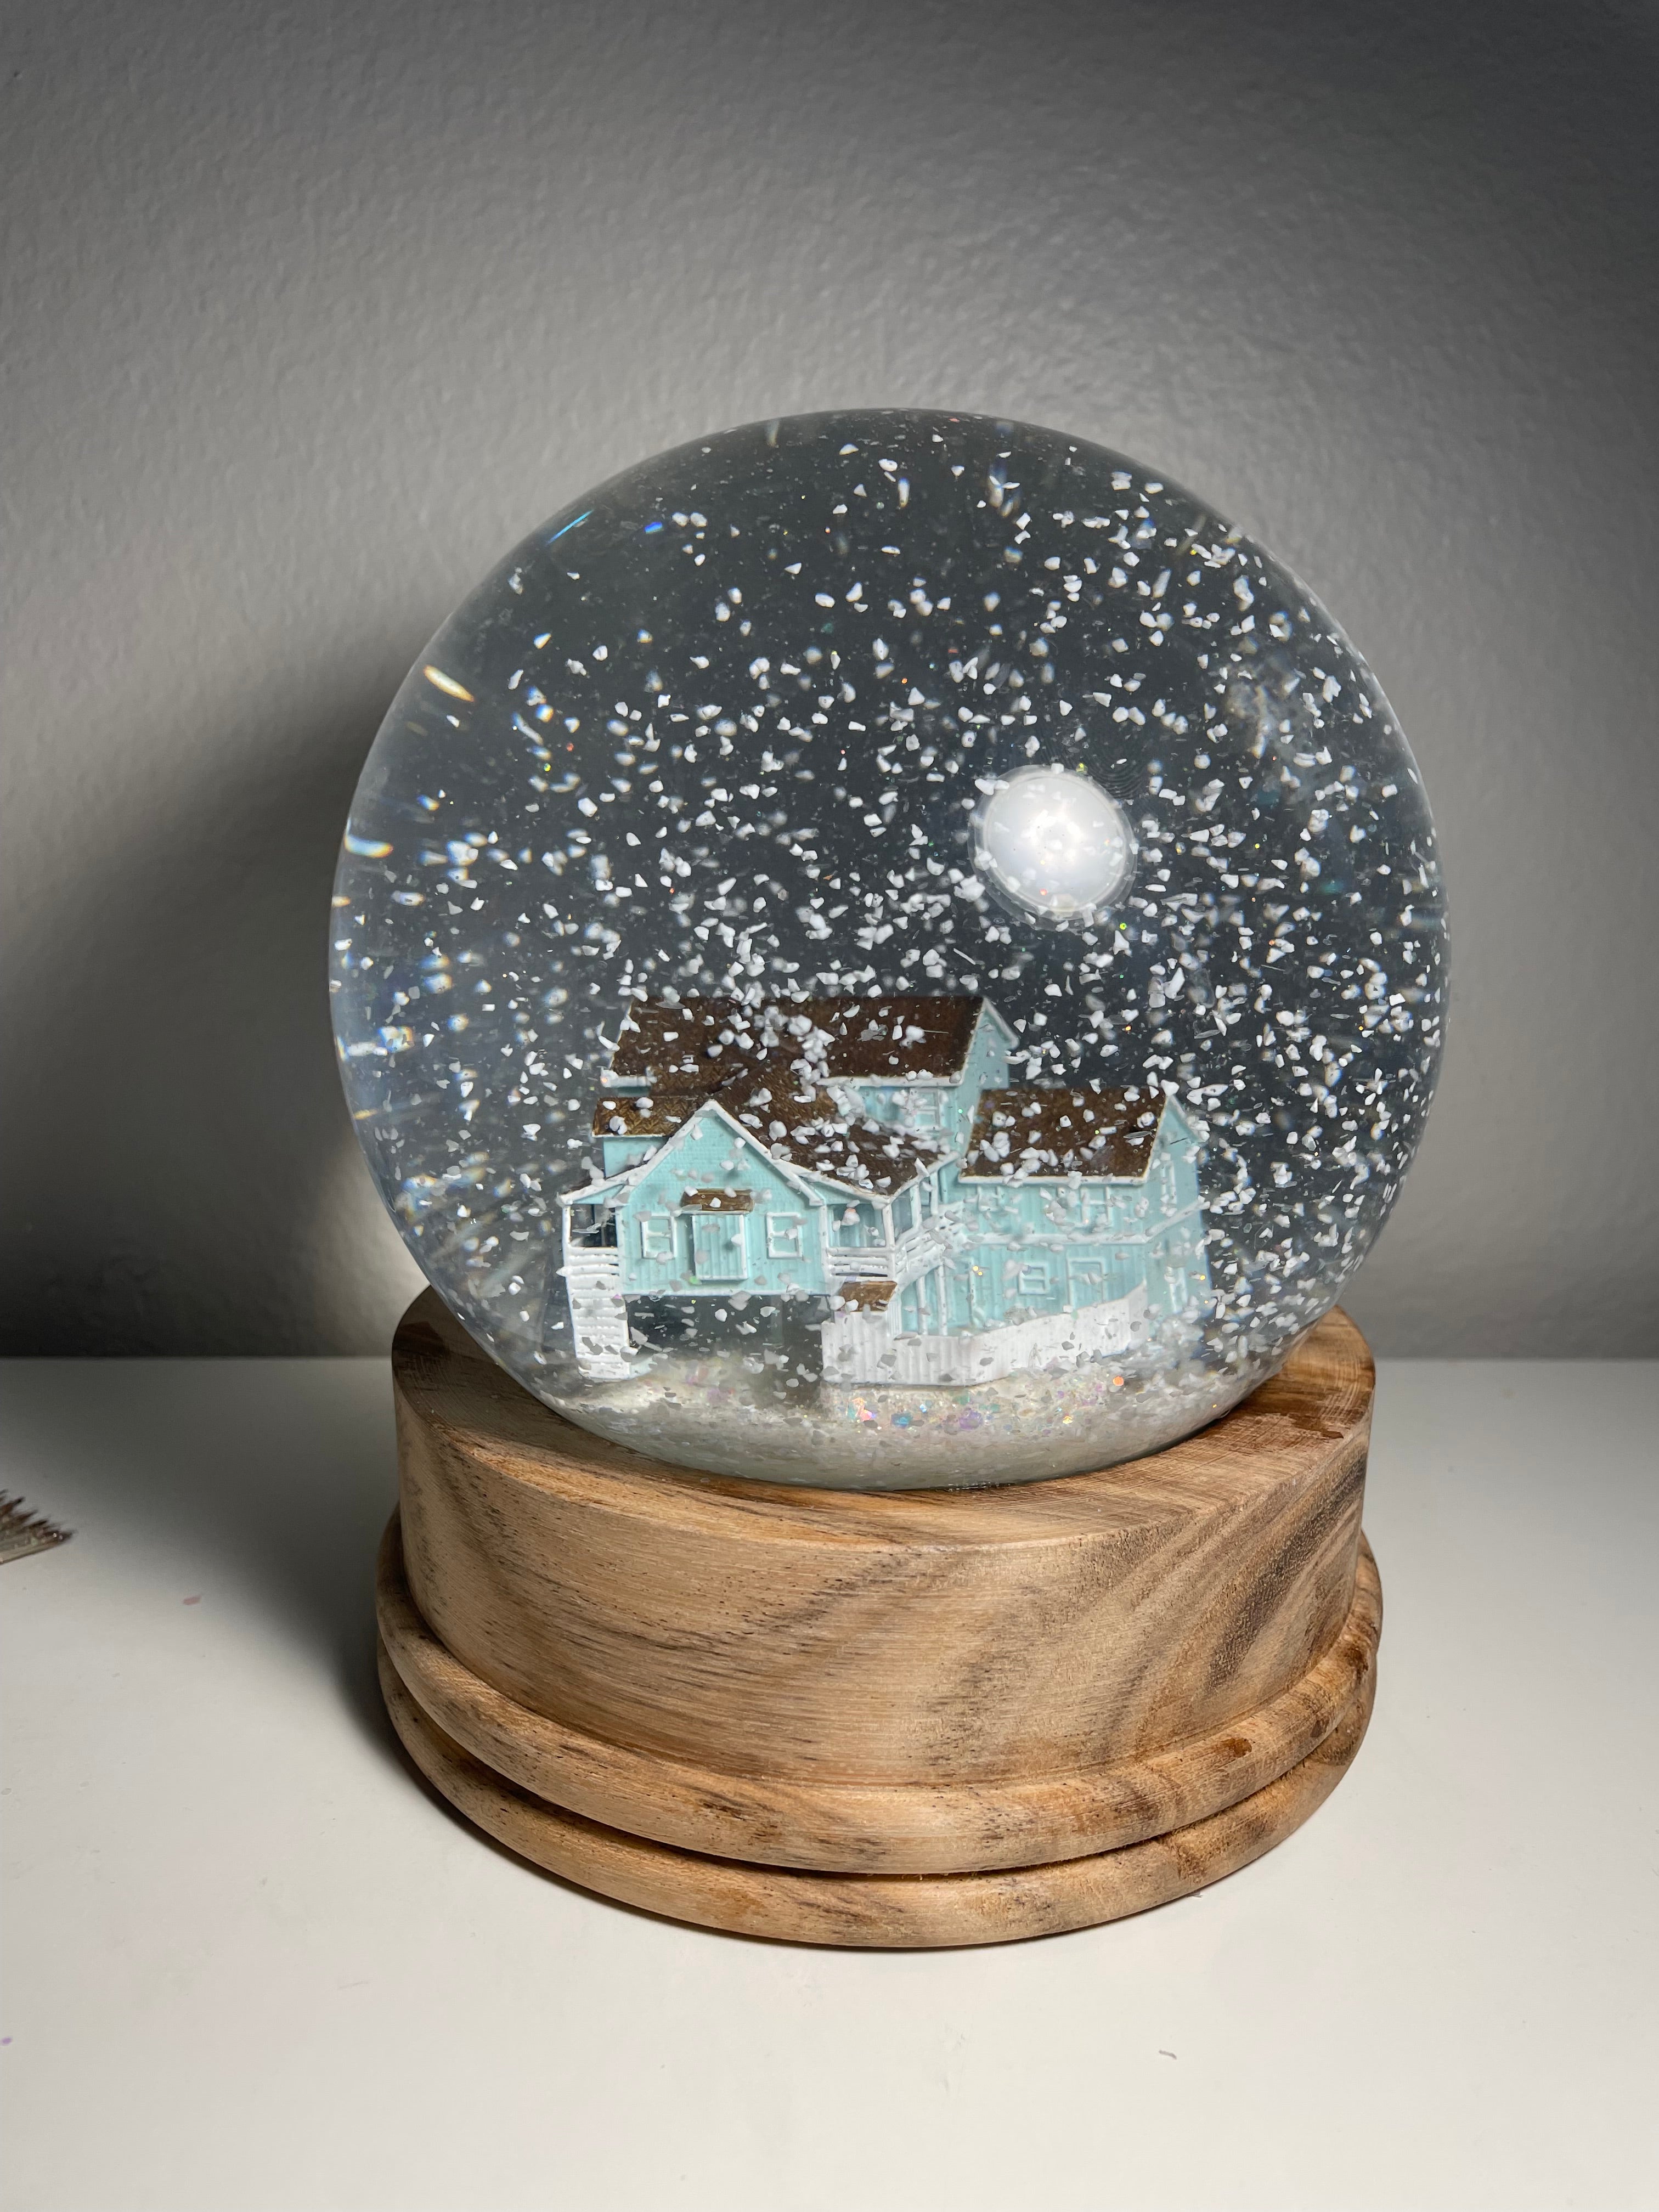 Astonishing Snow Globe Repair Kit with Custom Designs 